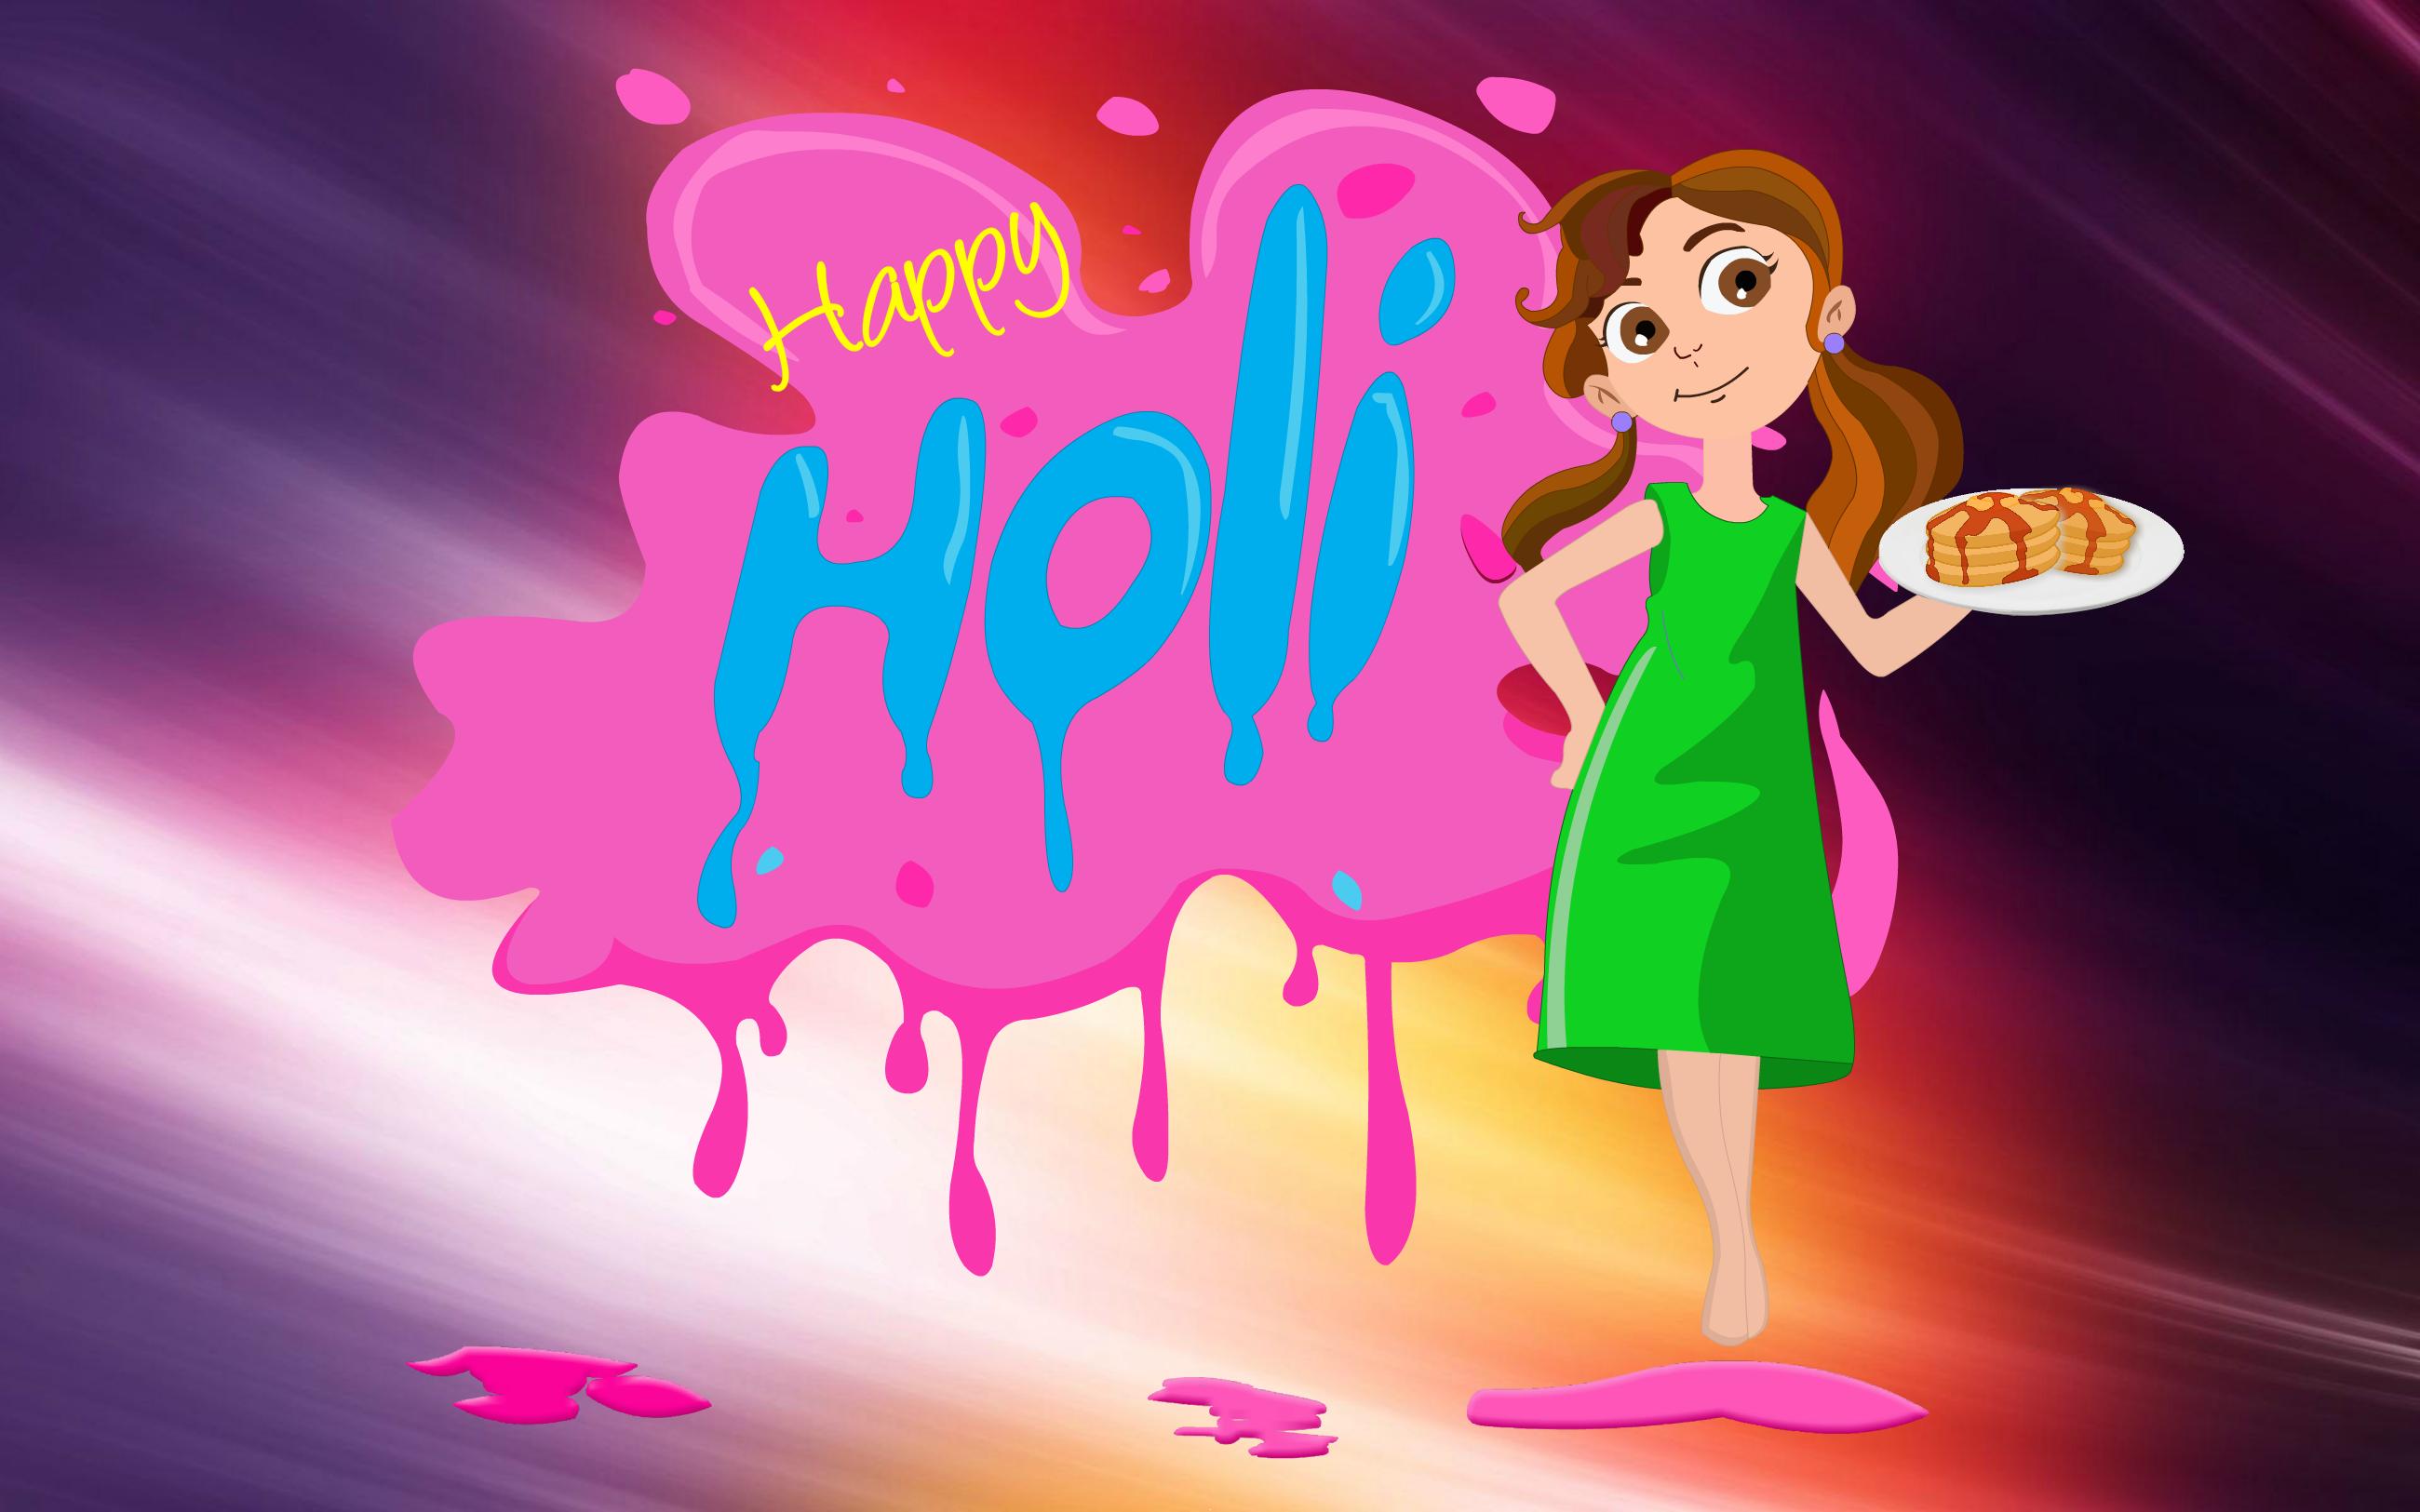 Download Cute Holi Hd Wallpapers - Holi Images Hd Cartoon , HD Wallpaper & Backgrounds